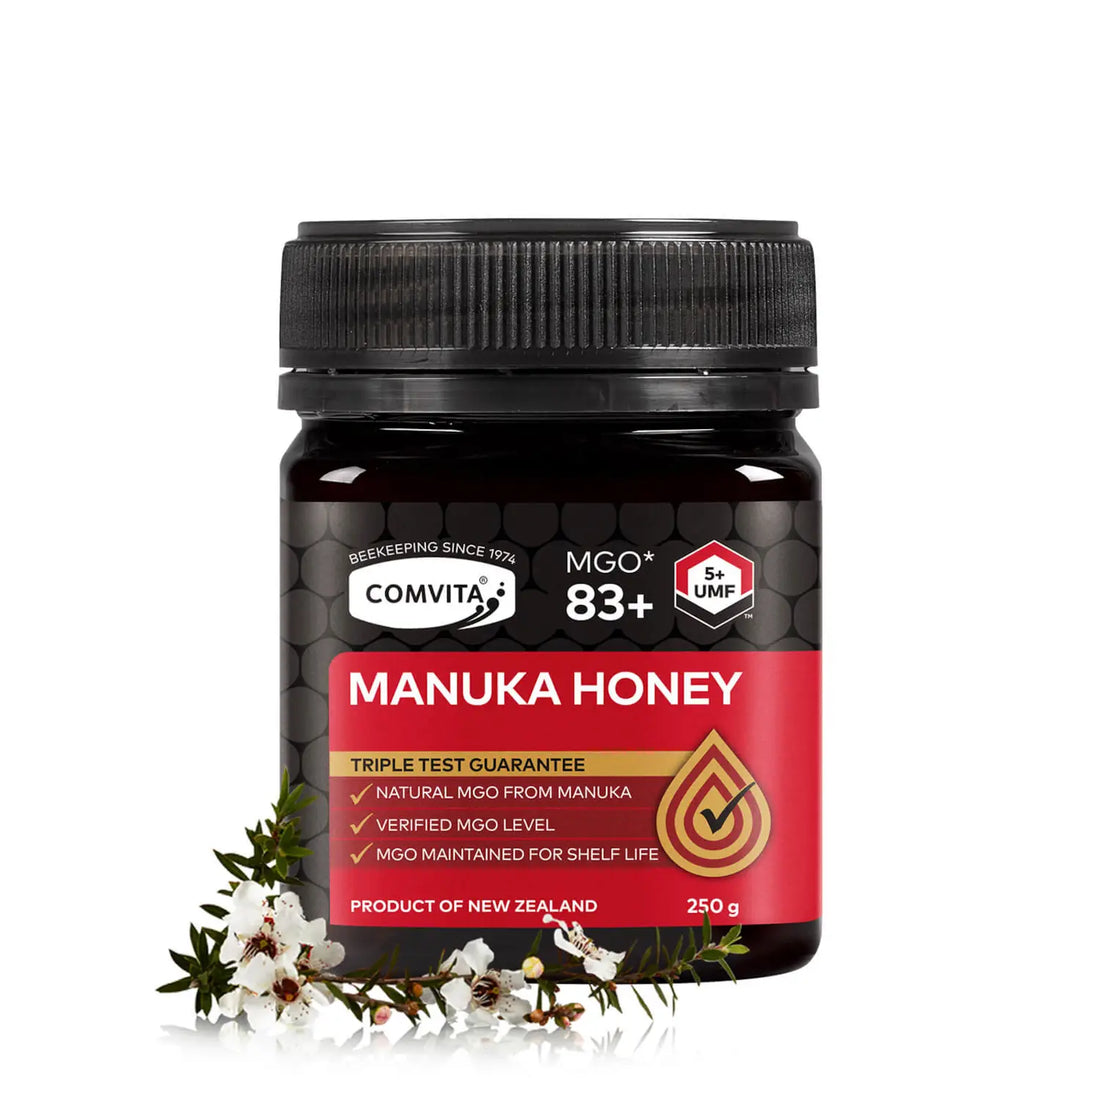 Comvita Manuka Honey 250g (UMF™5+) (MGO 83+)